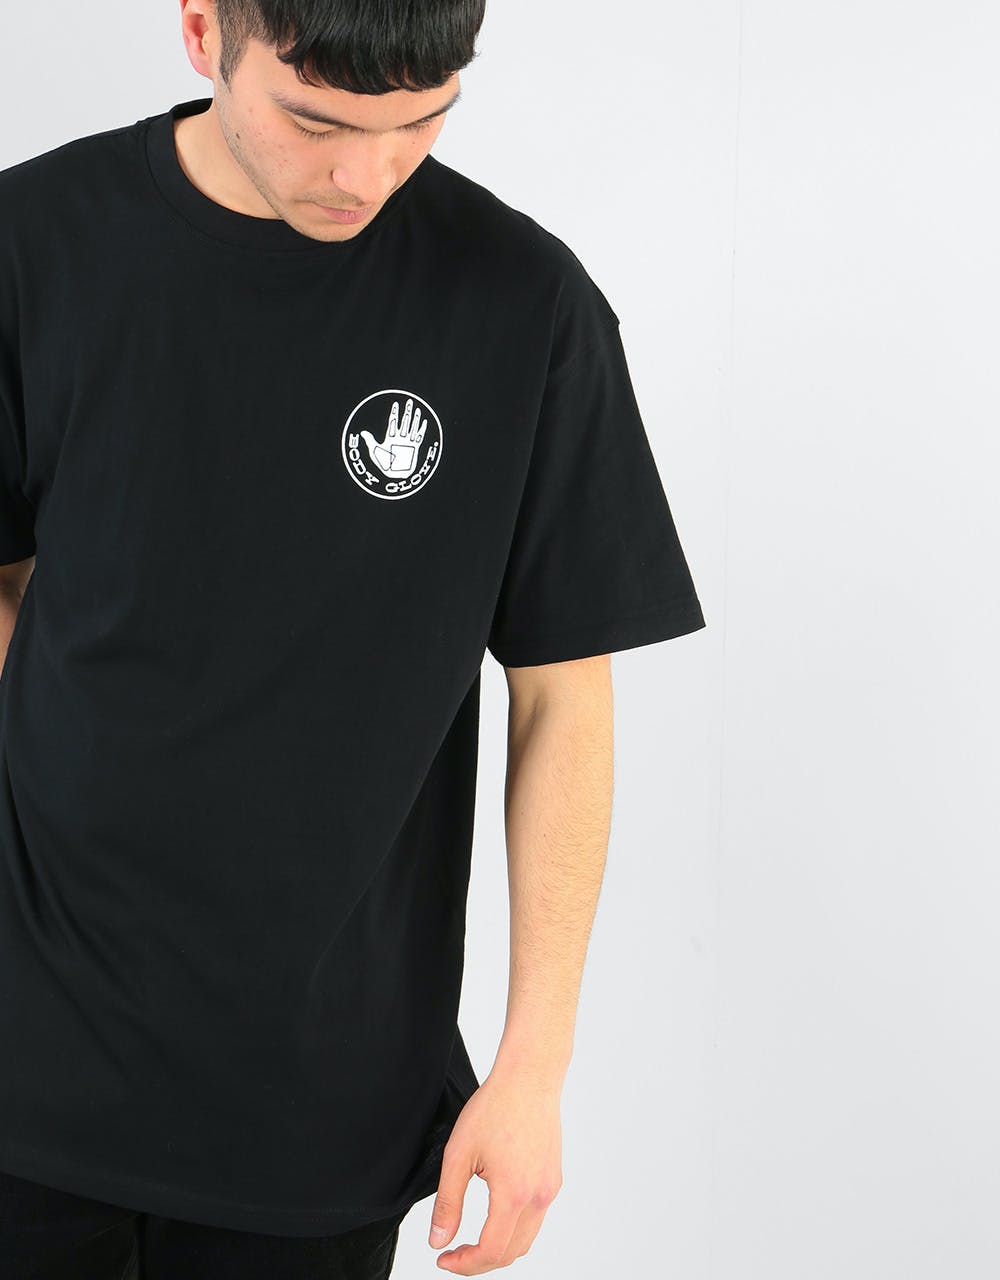 Body Glove Core Logo T-Shirt - Black